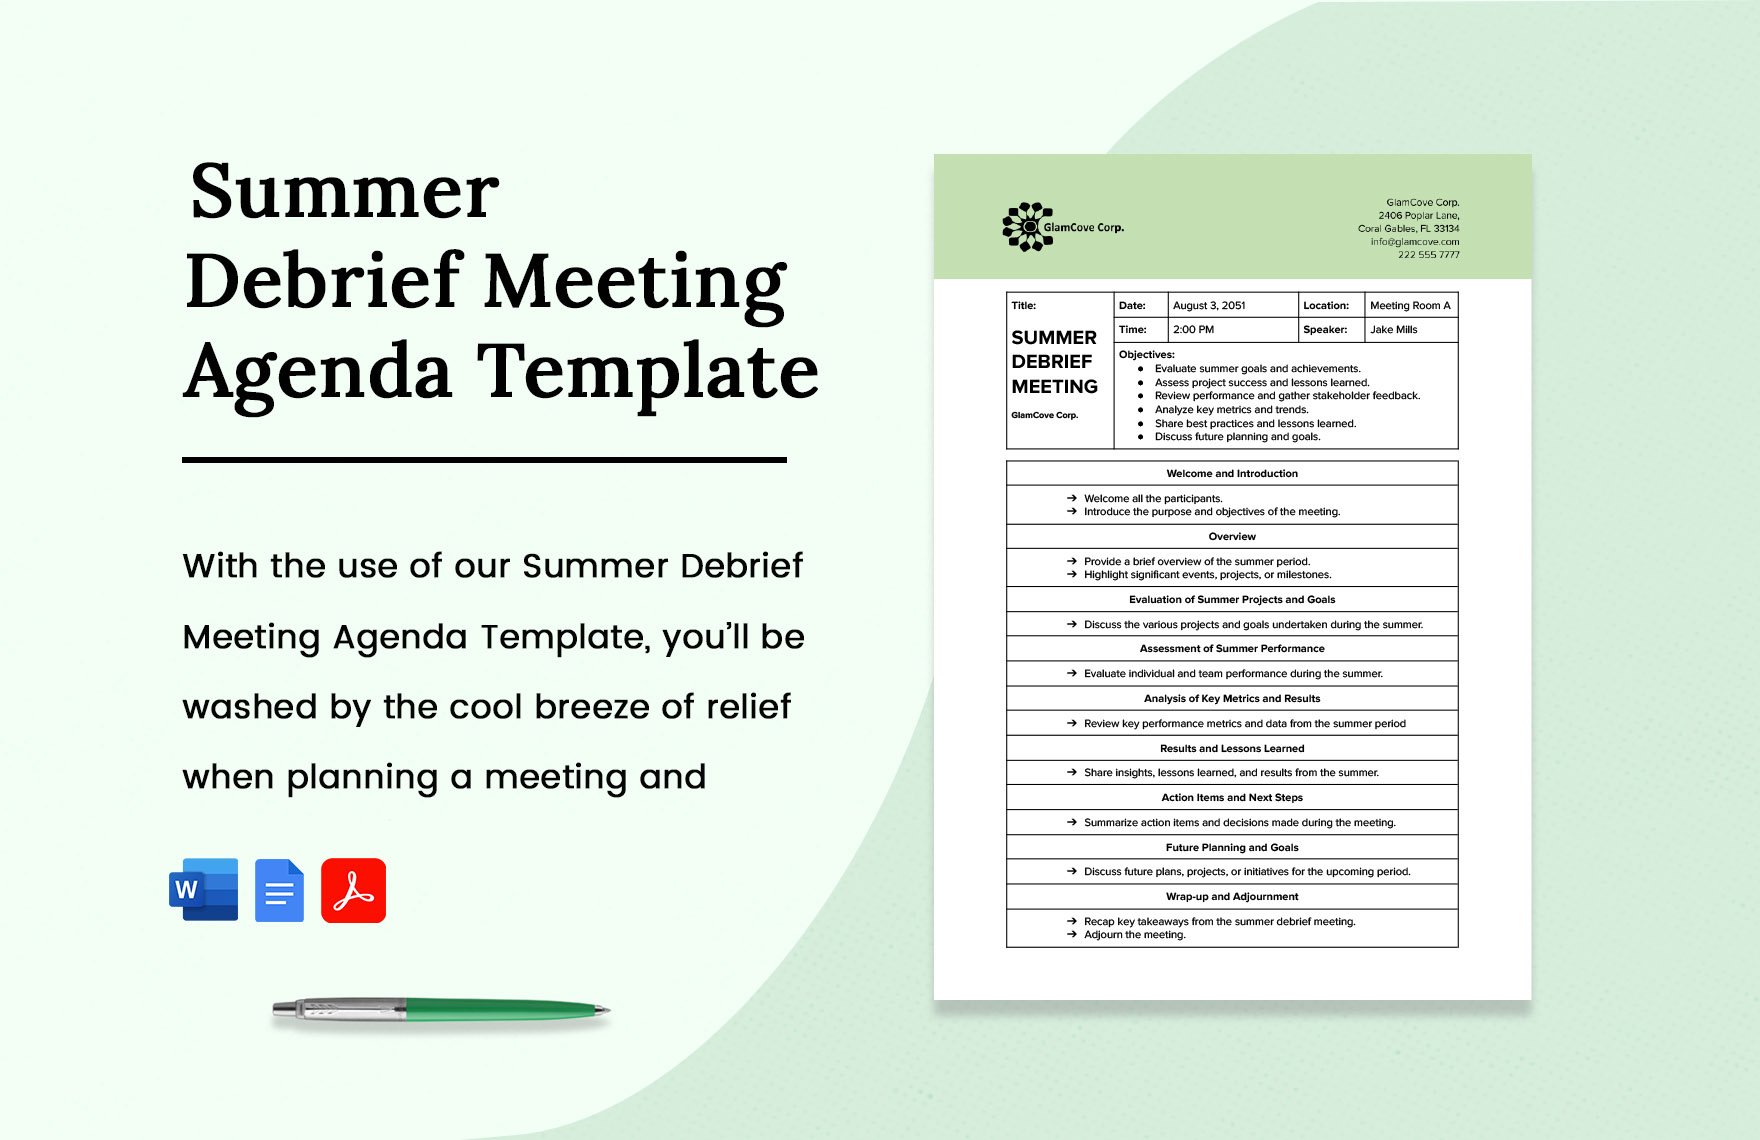 Summer Debrief Meeting Agenda